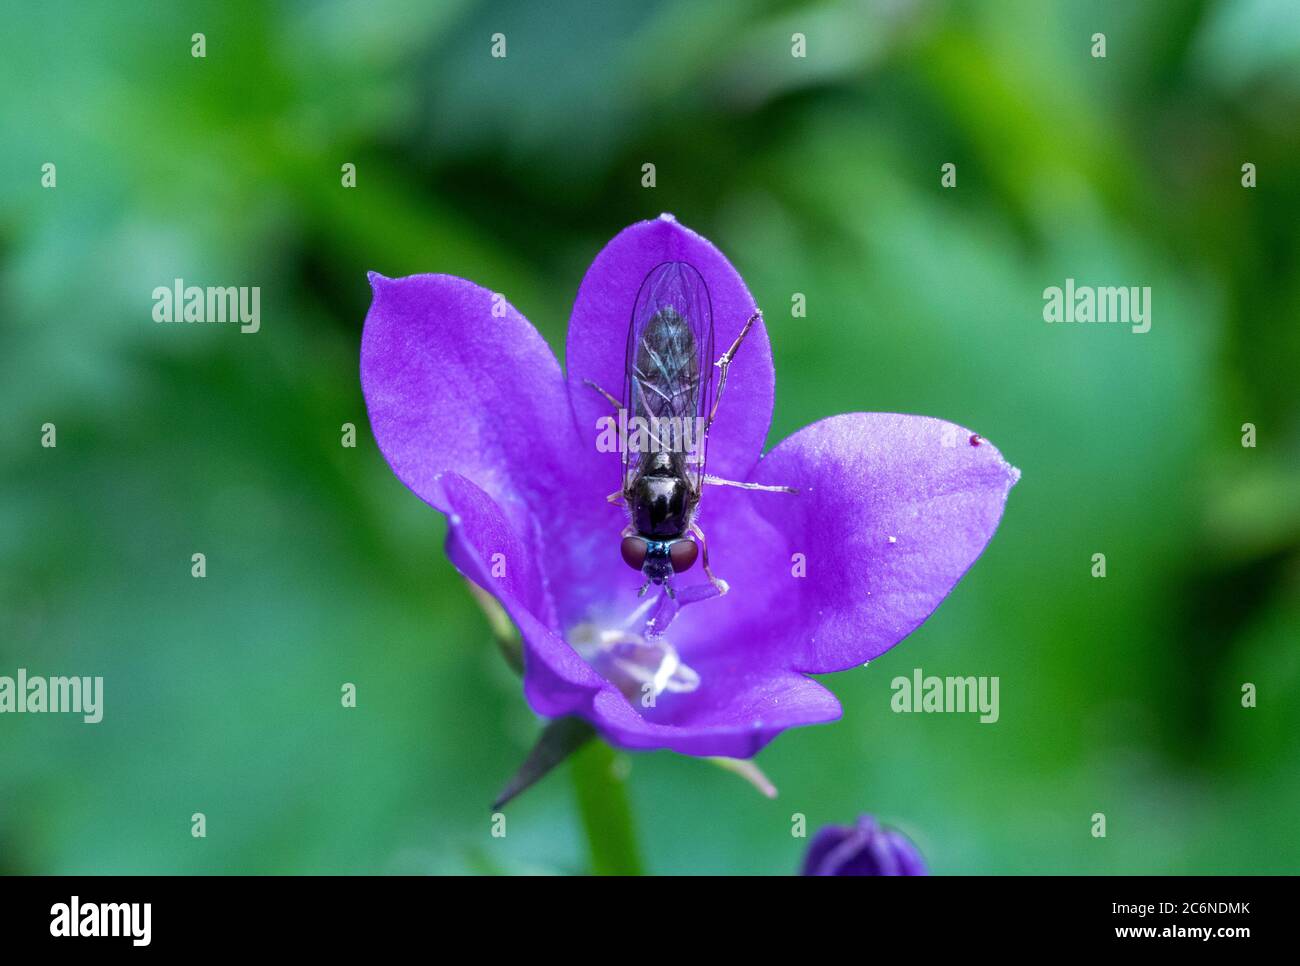 Female Platycheirus albimanus hoverfly on campanula flower Stock Photo